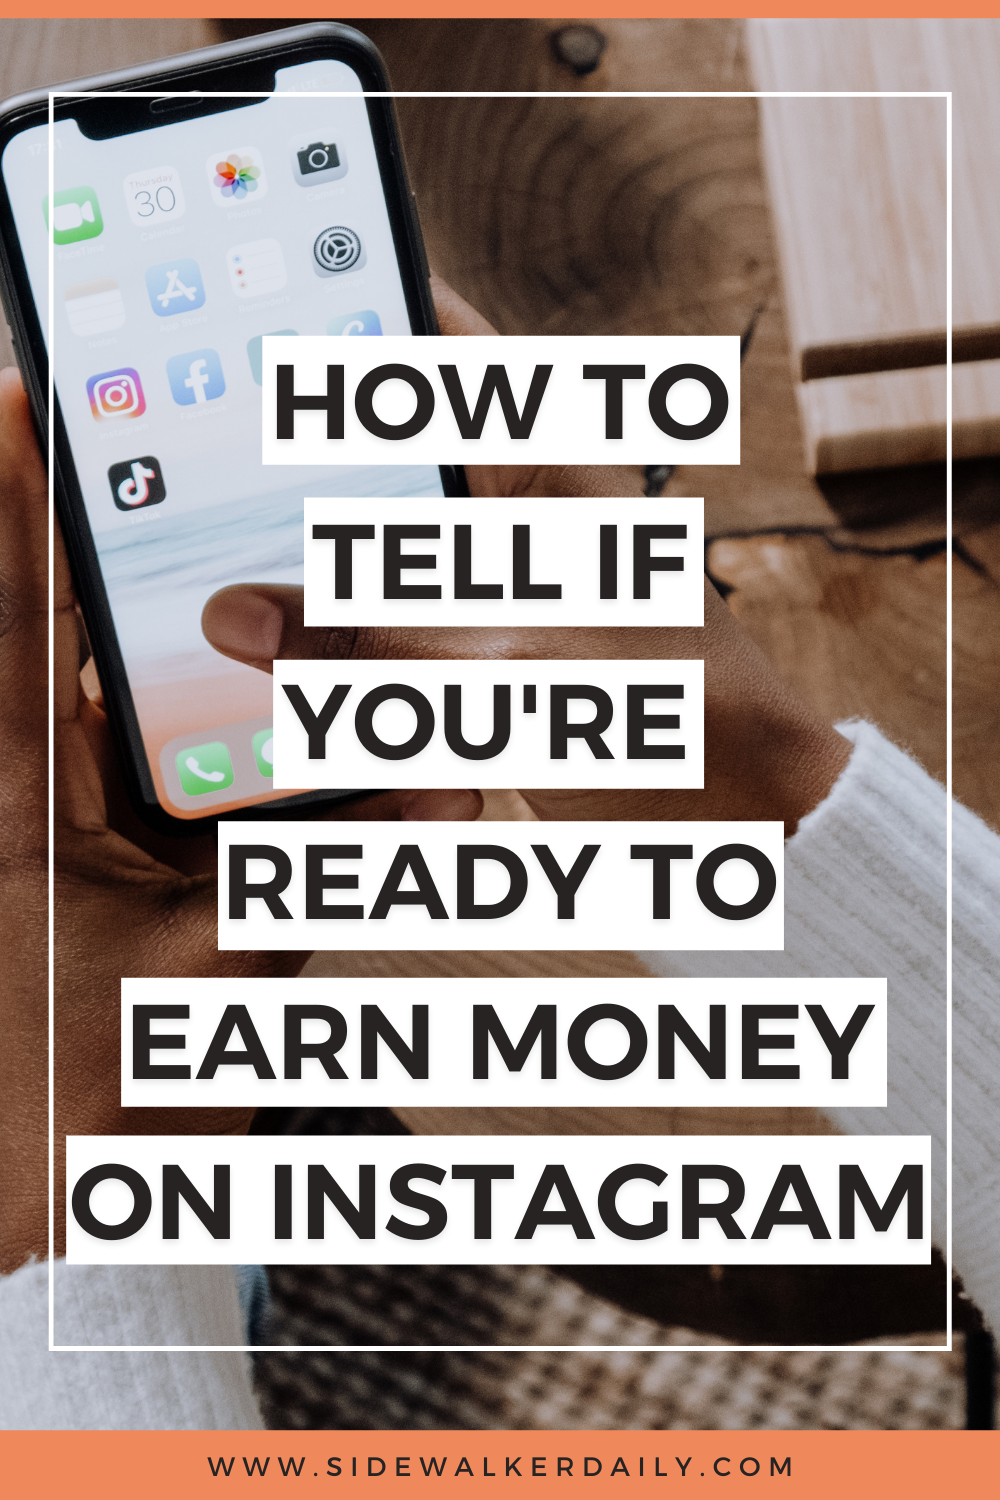 How to earn money on instagram